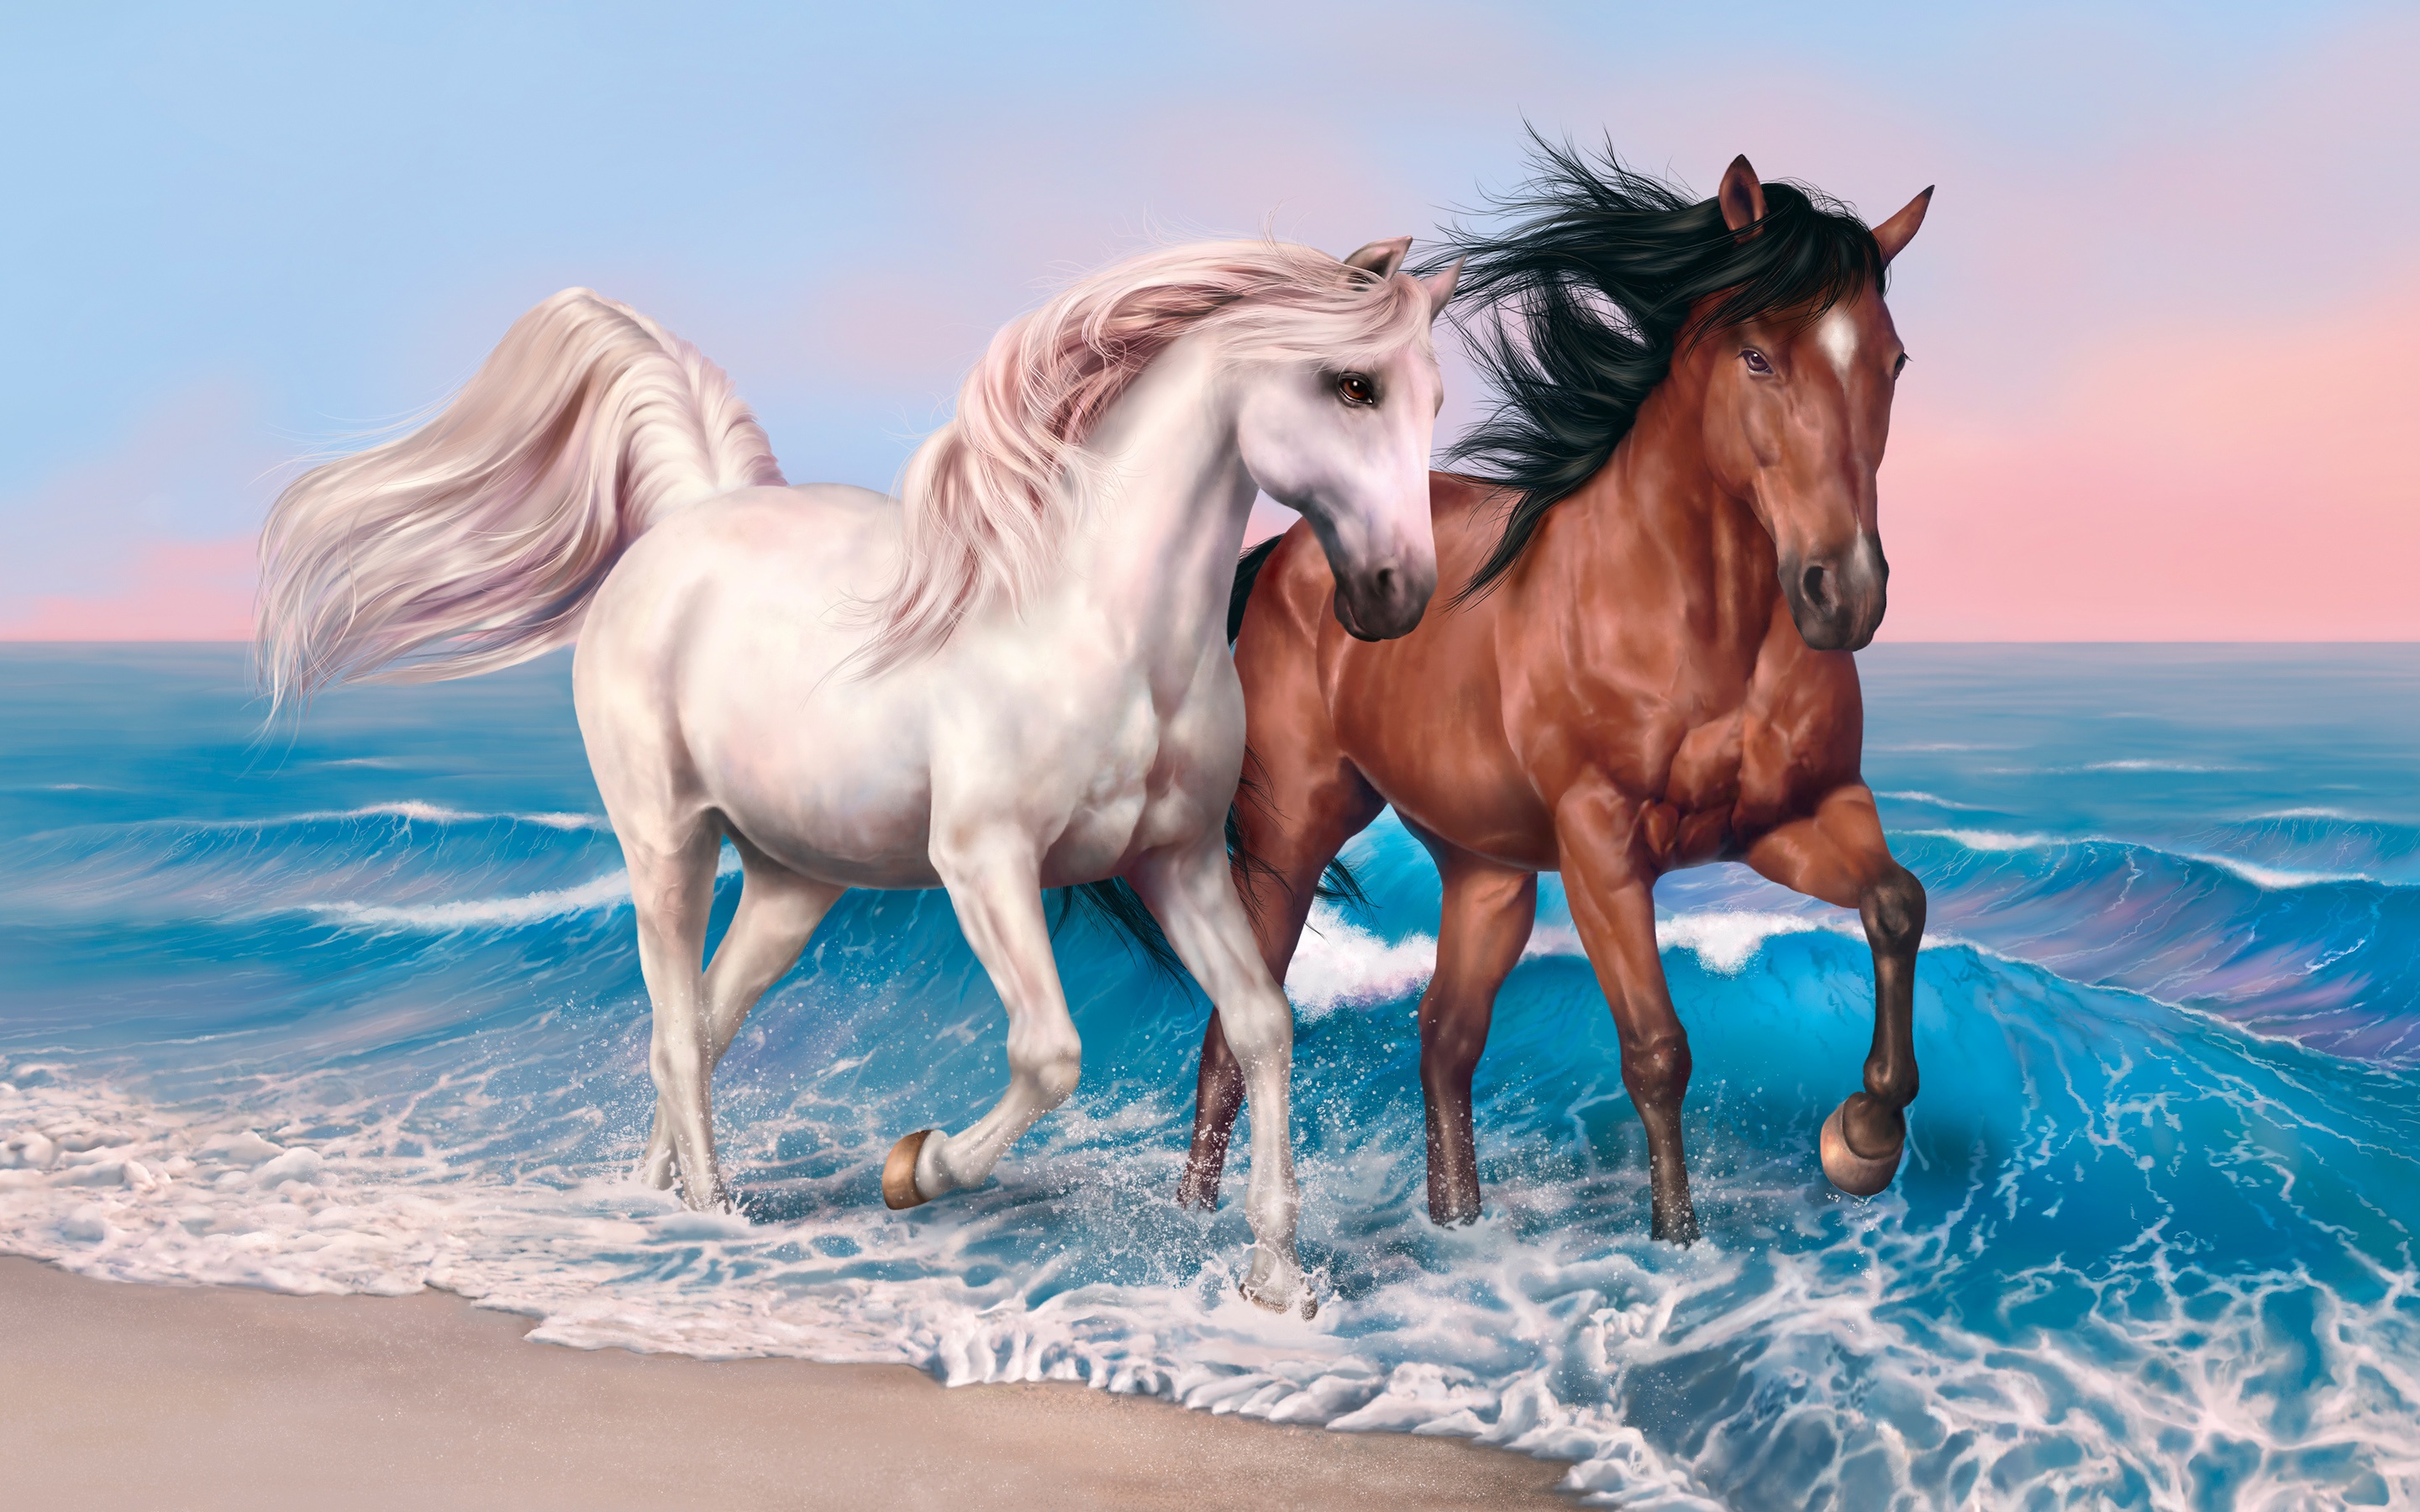 660224 descargar imagen mar, caballo, animales, ola: fondos de pantalla y protectores de pantalla gratis